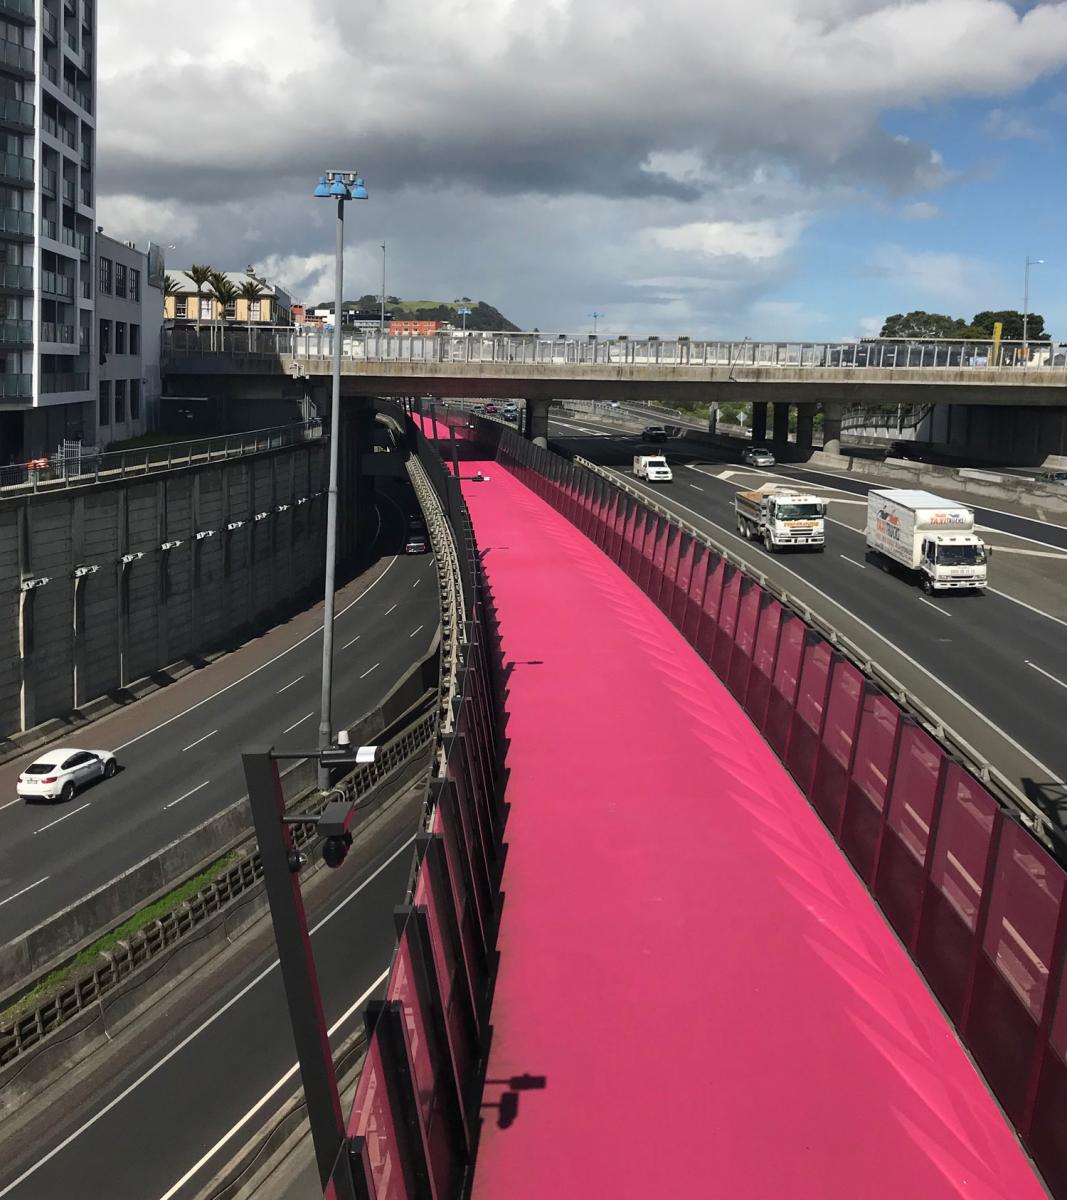 view of pink path bike lane above city street